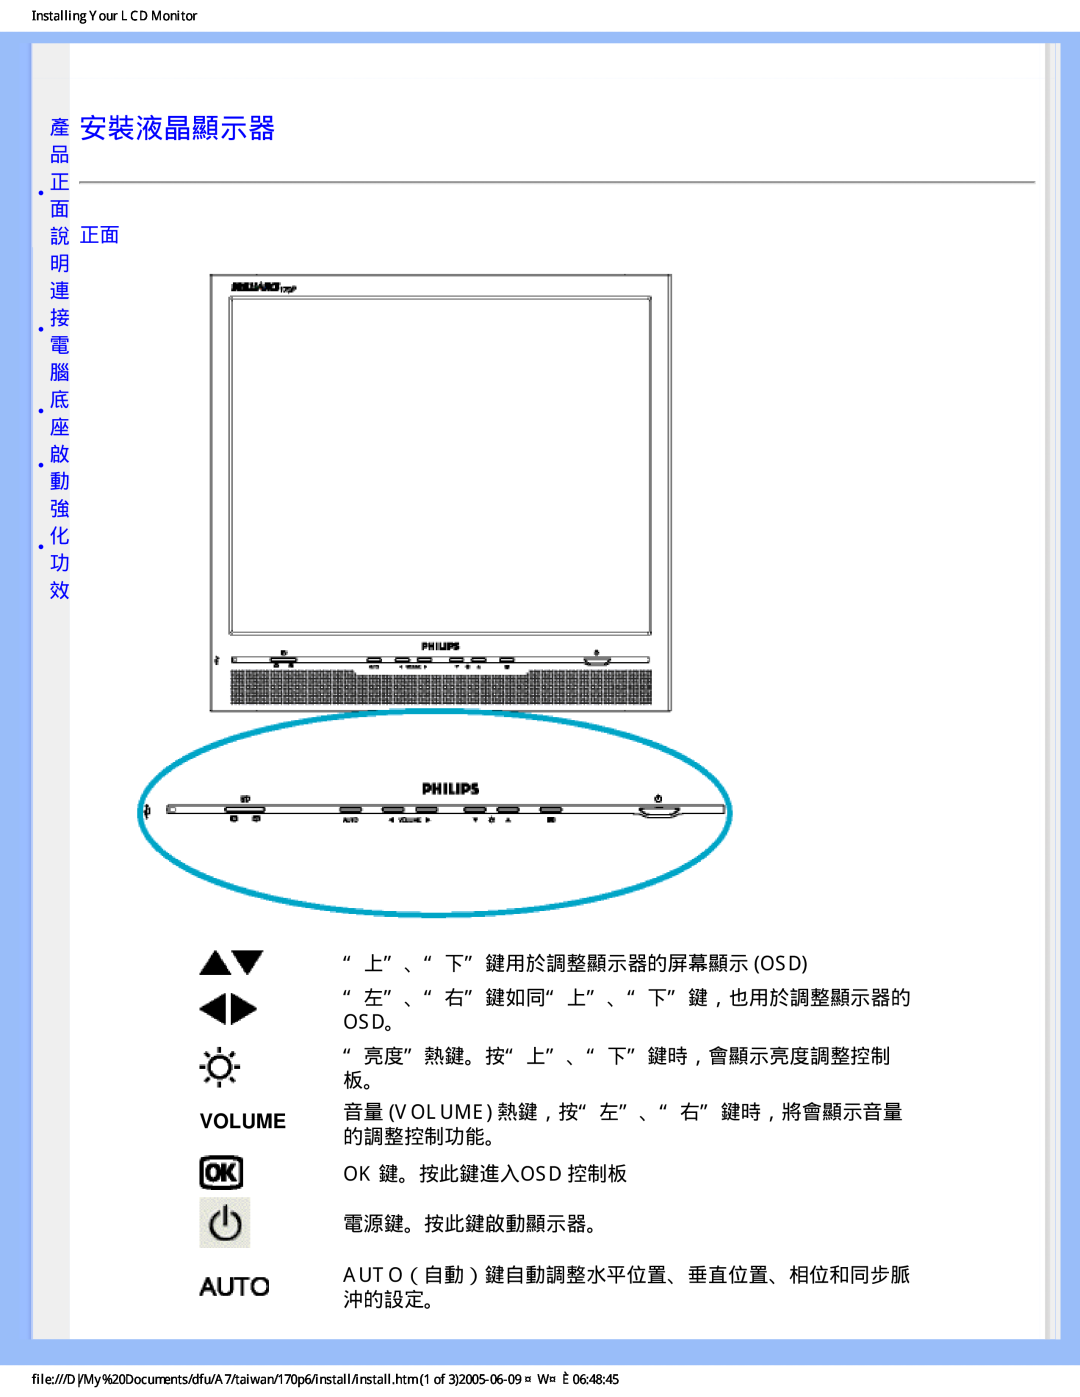 Philips R6RY0 產 安裝液晶顯示器, Volume, “上”、“下”鍵用於調整顯示器的屏幕顯示 Osd “左”、“右”鍵如同“上”、“下”鍵，也用於調整顯示器的 Osd。, Installing Your LCD Monitor 